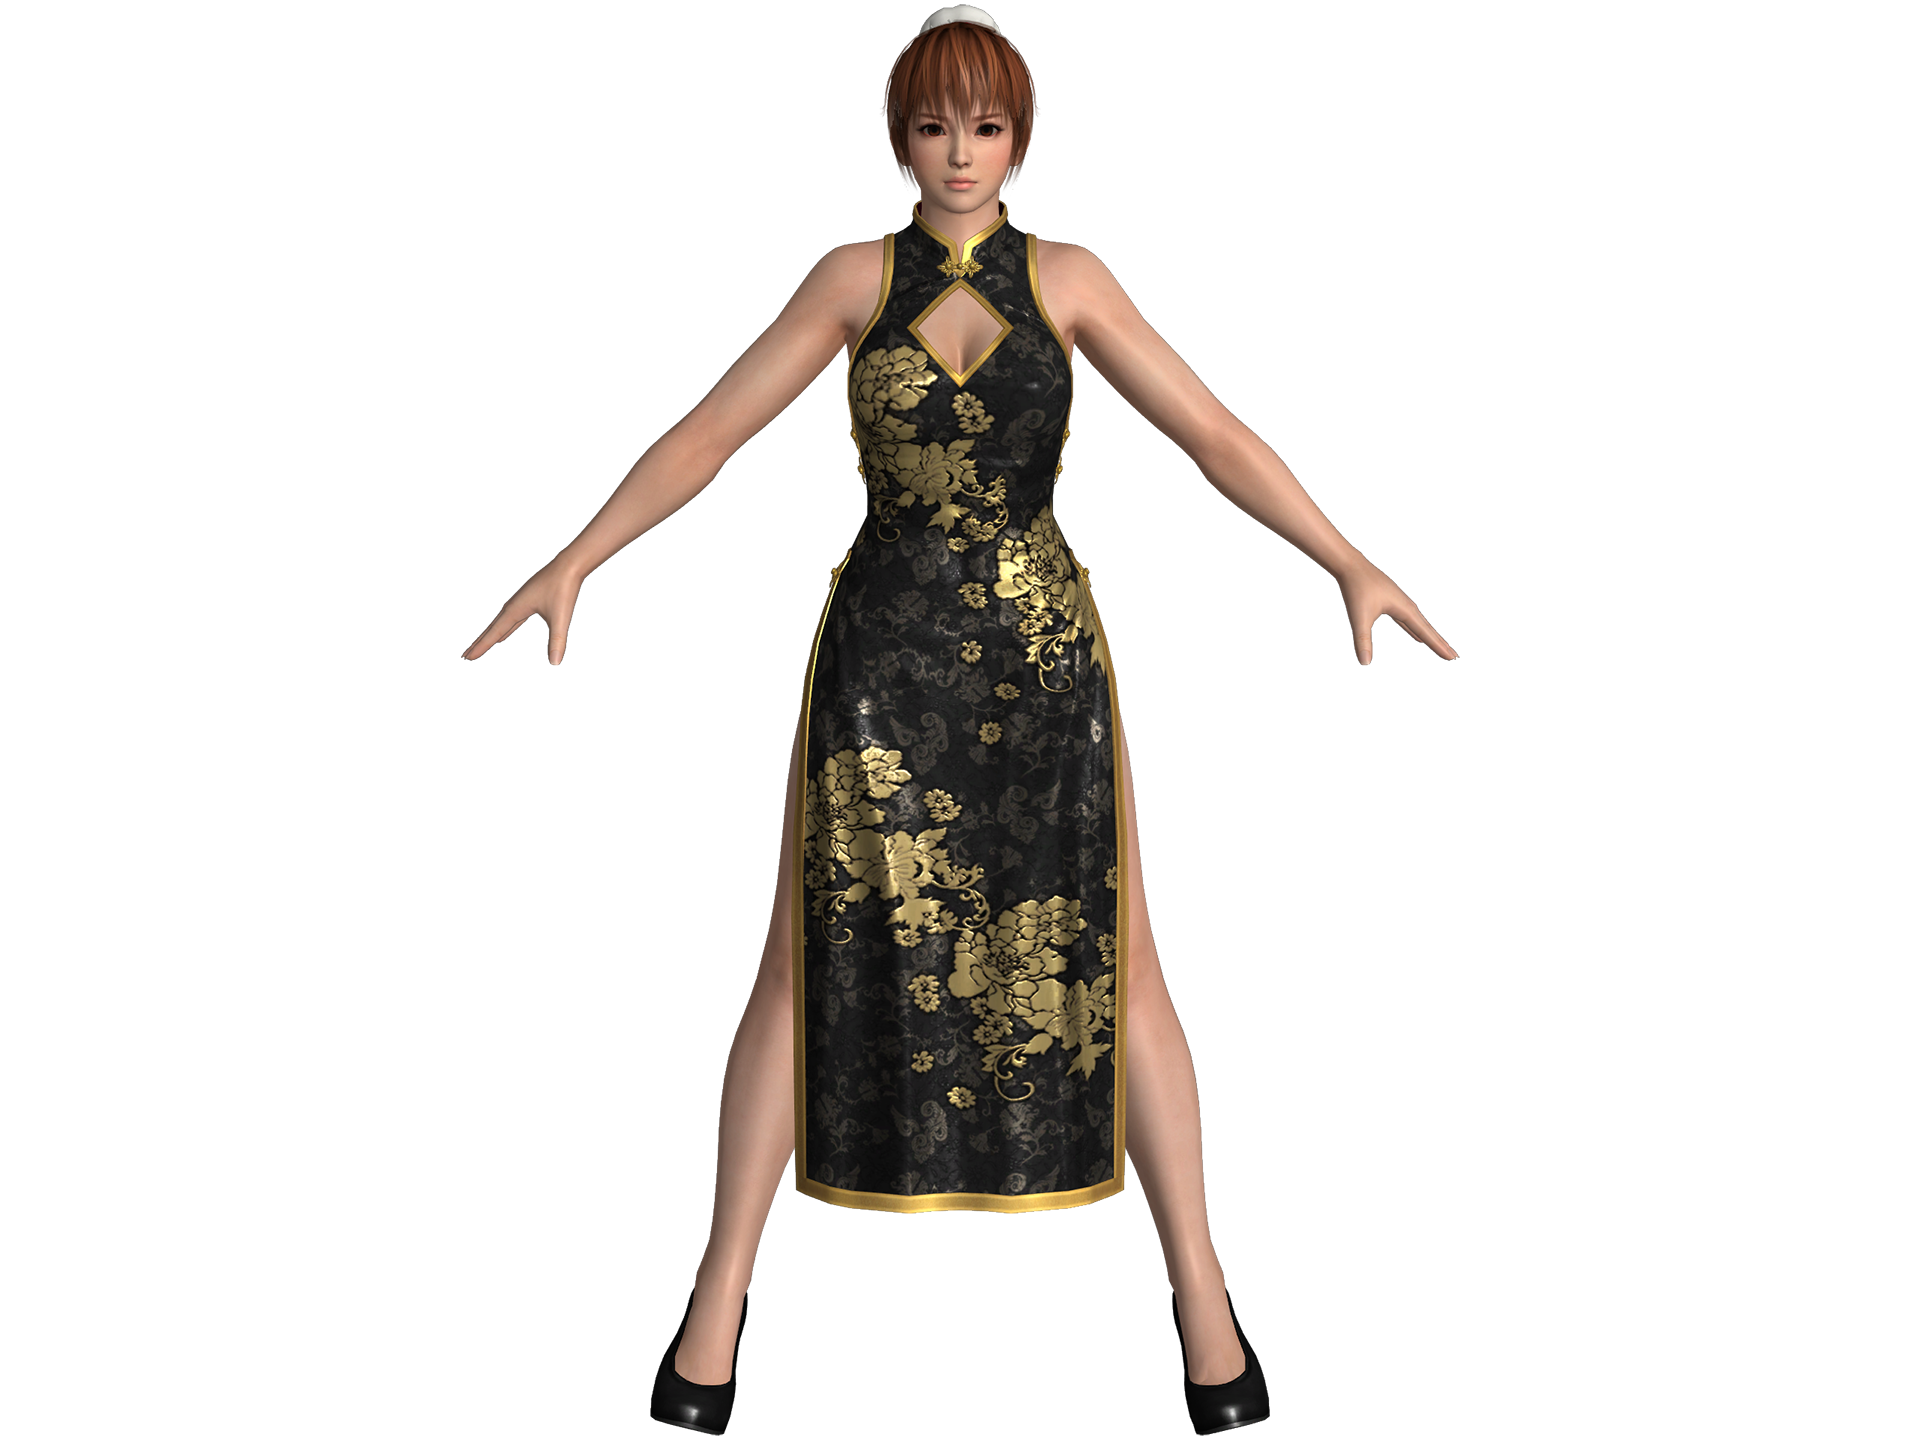 DOA5 LR Helena Alluring Mandarin dress by zareef on DeviantArt